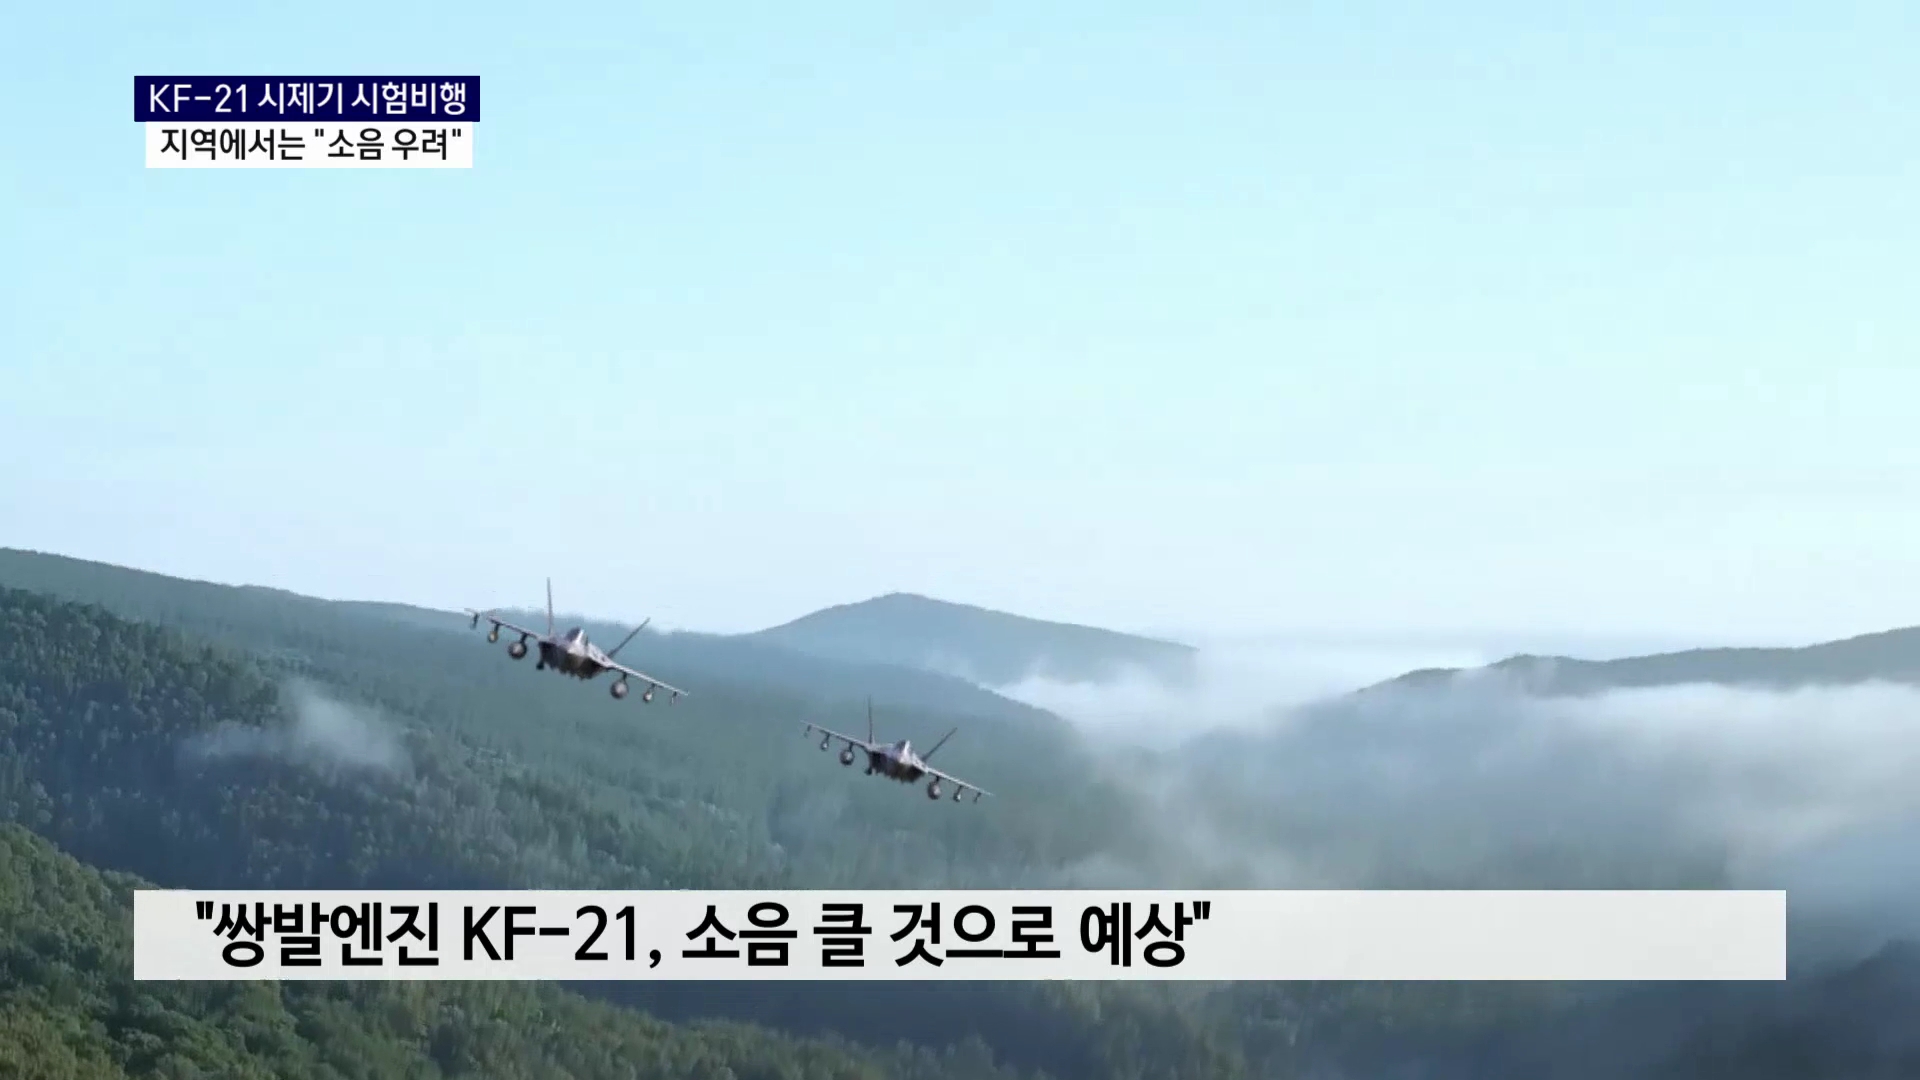 (R) KF-21 시험비행..지역에서는 